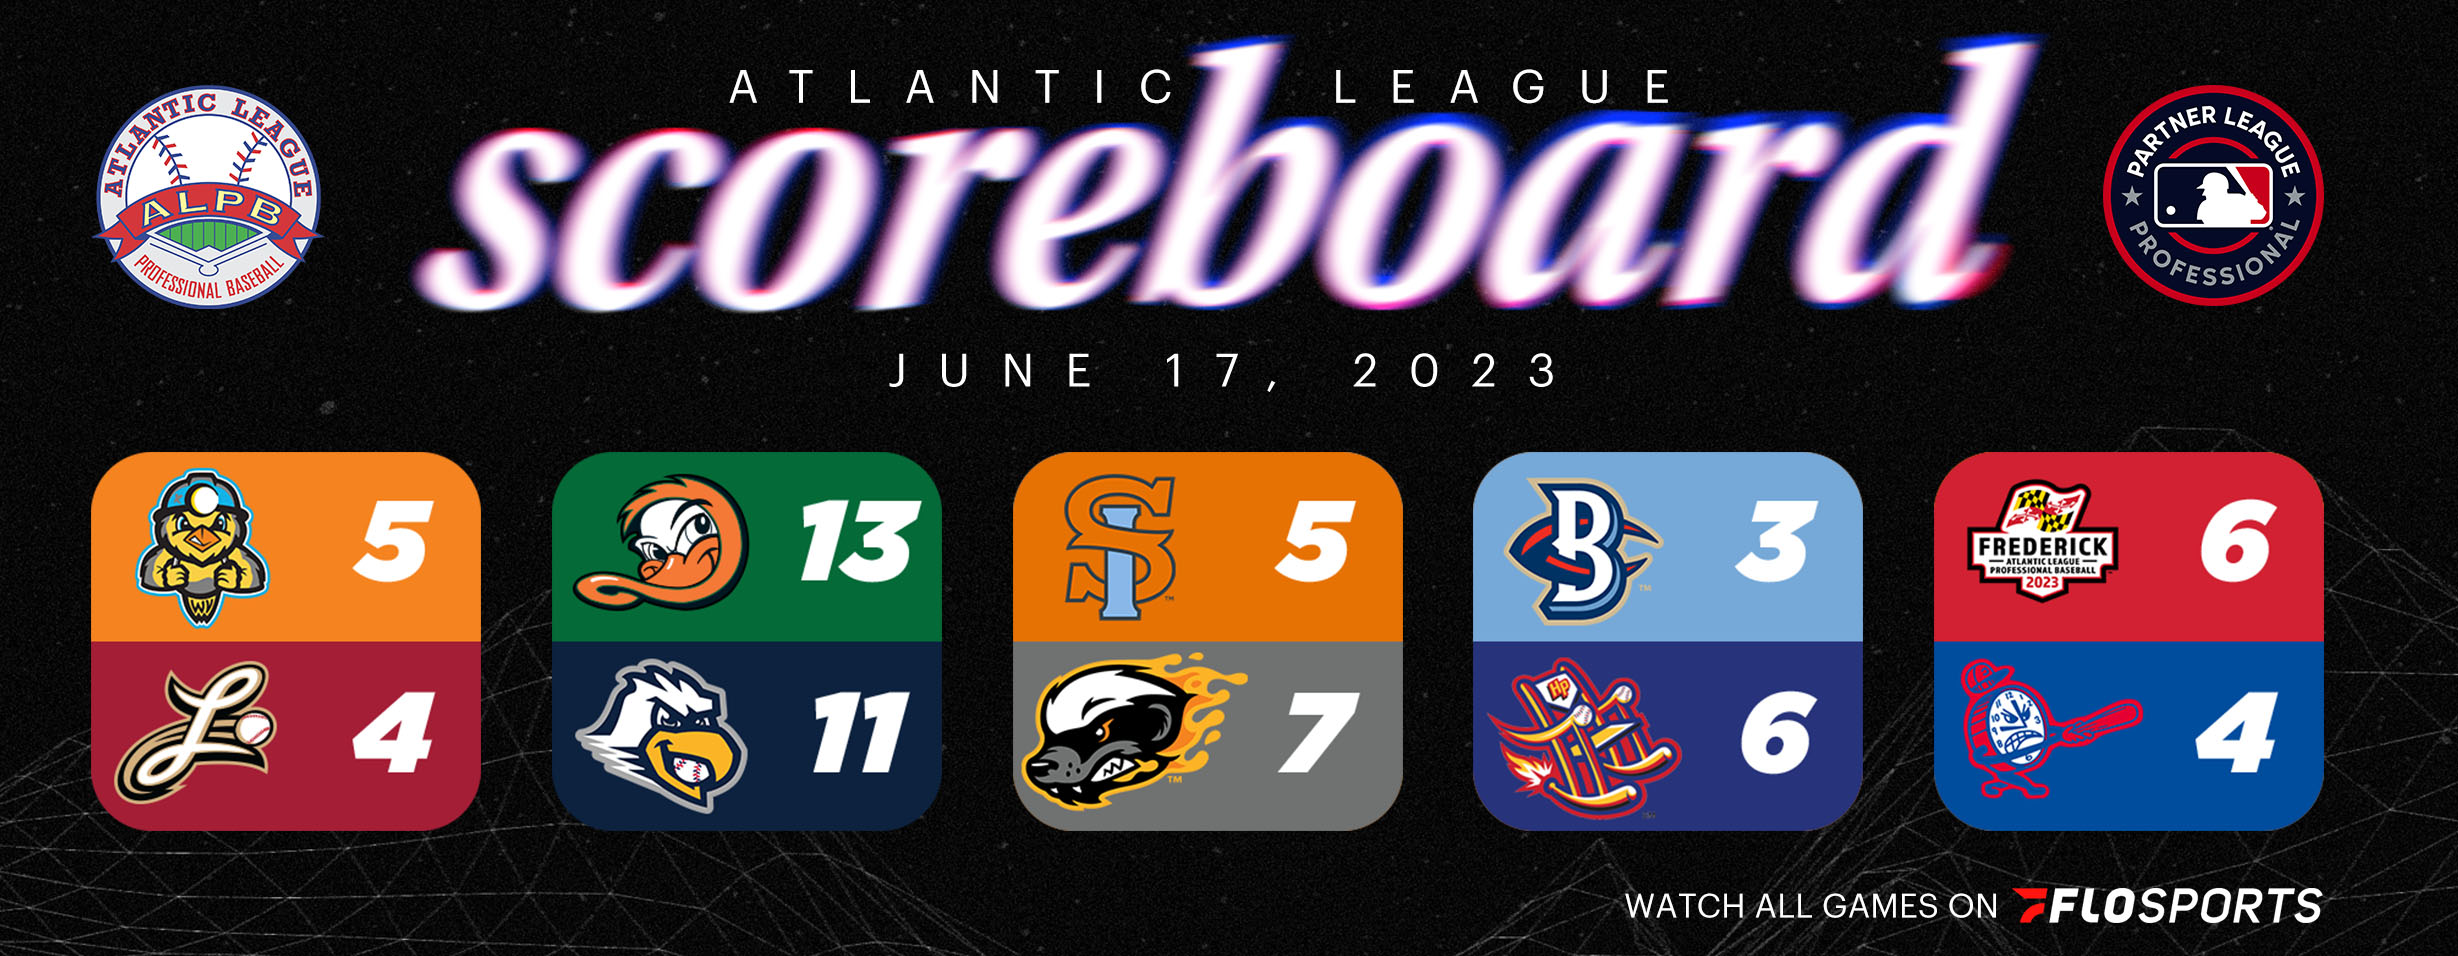 Atlantic League Professional Baseball News